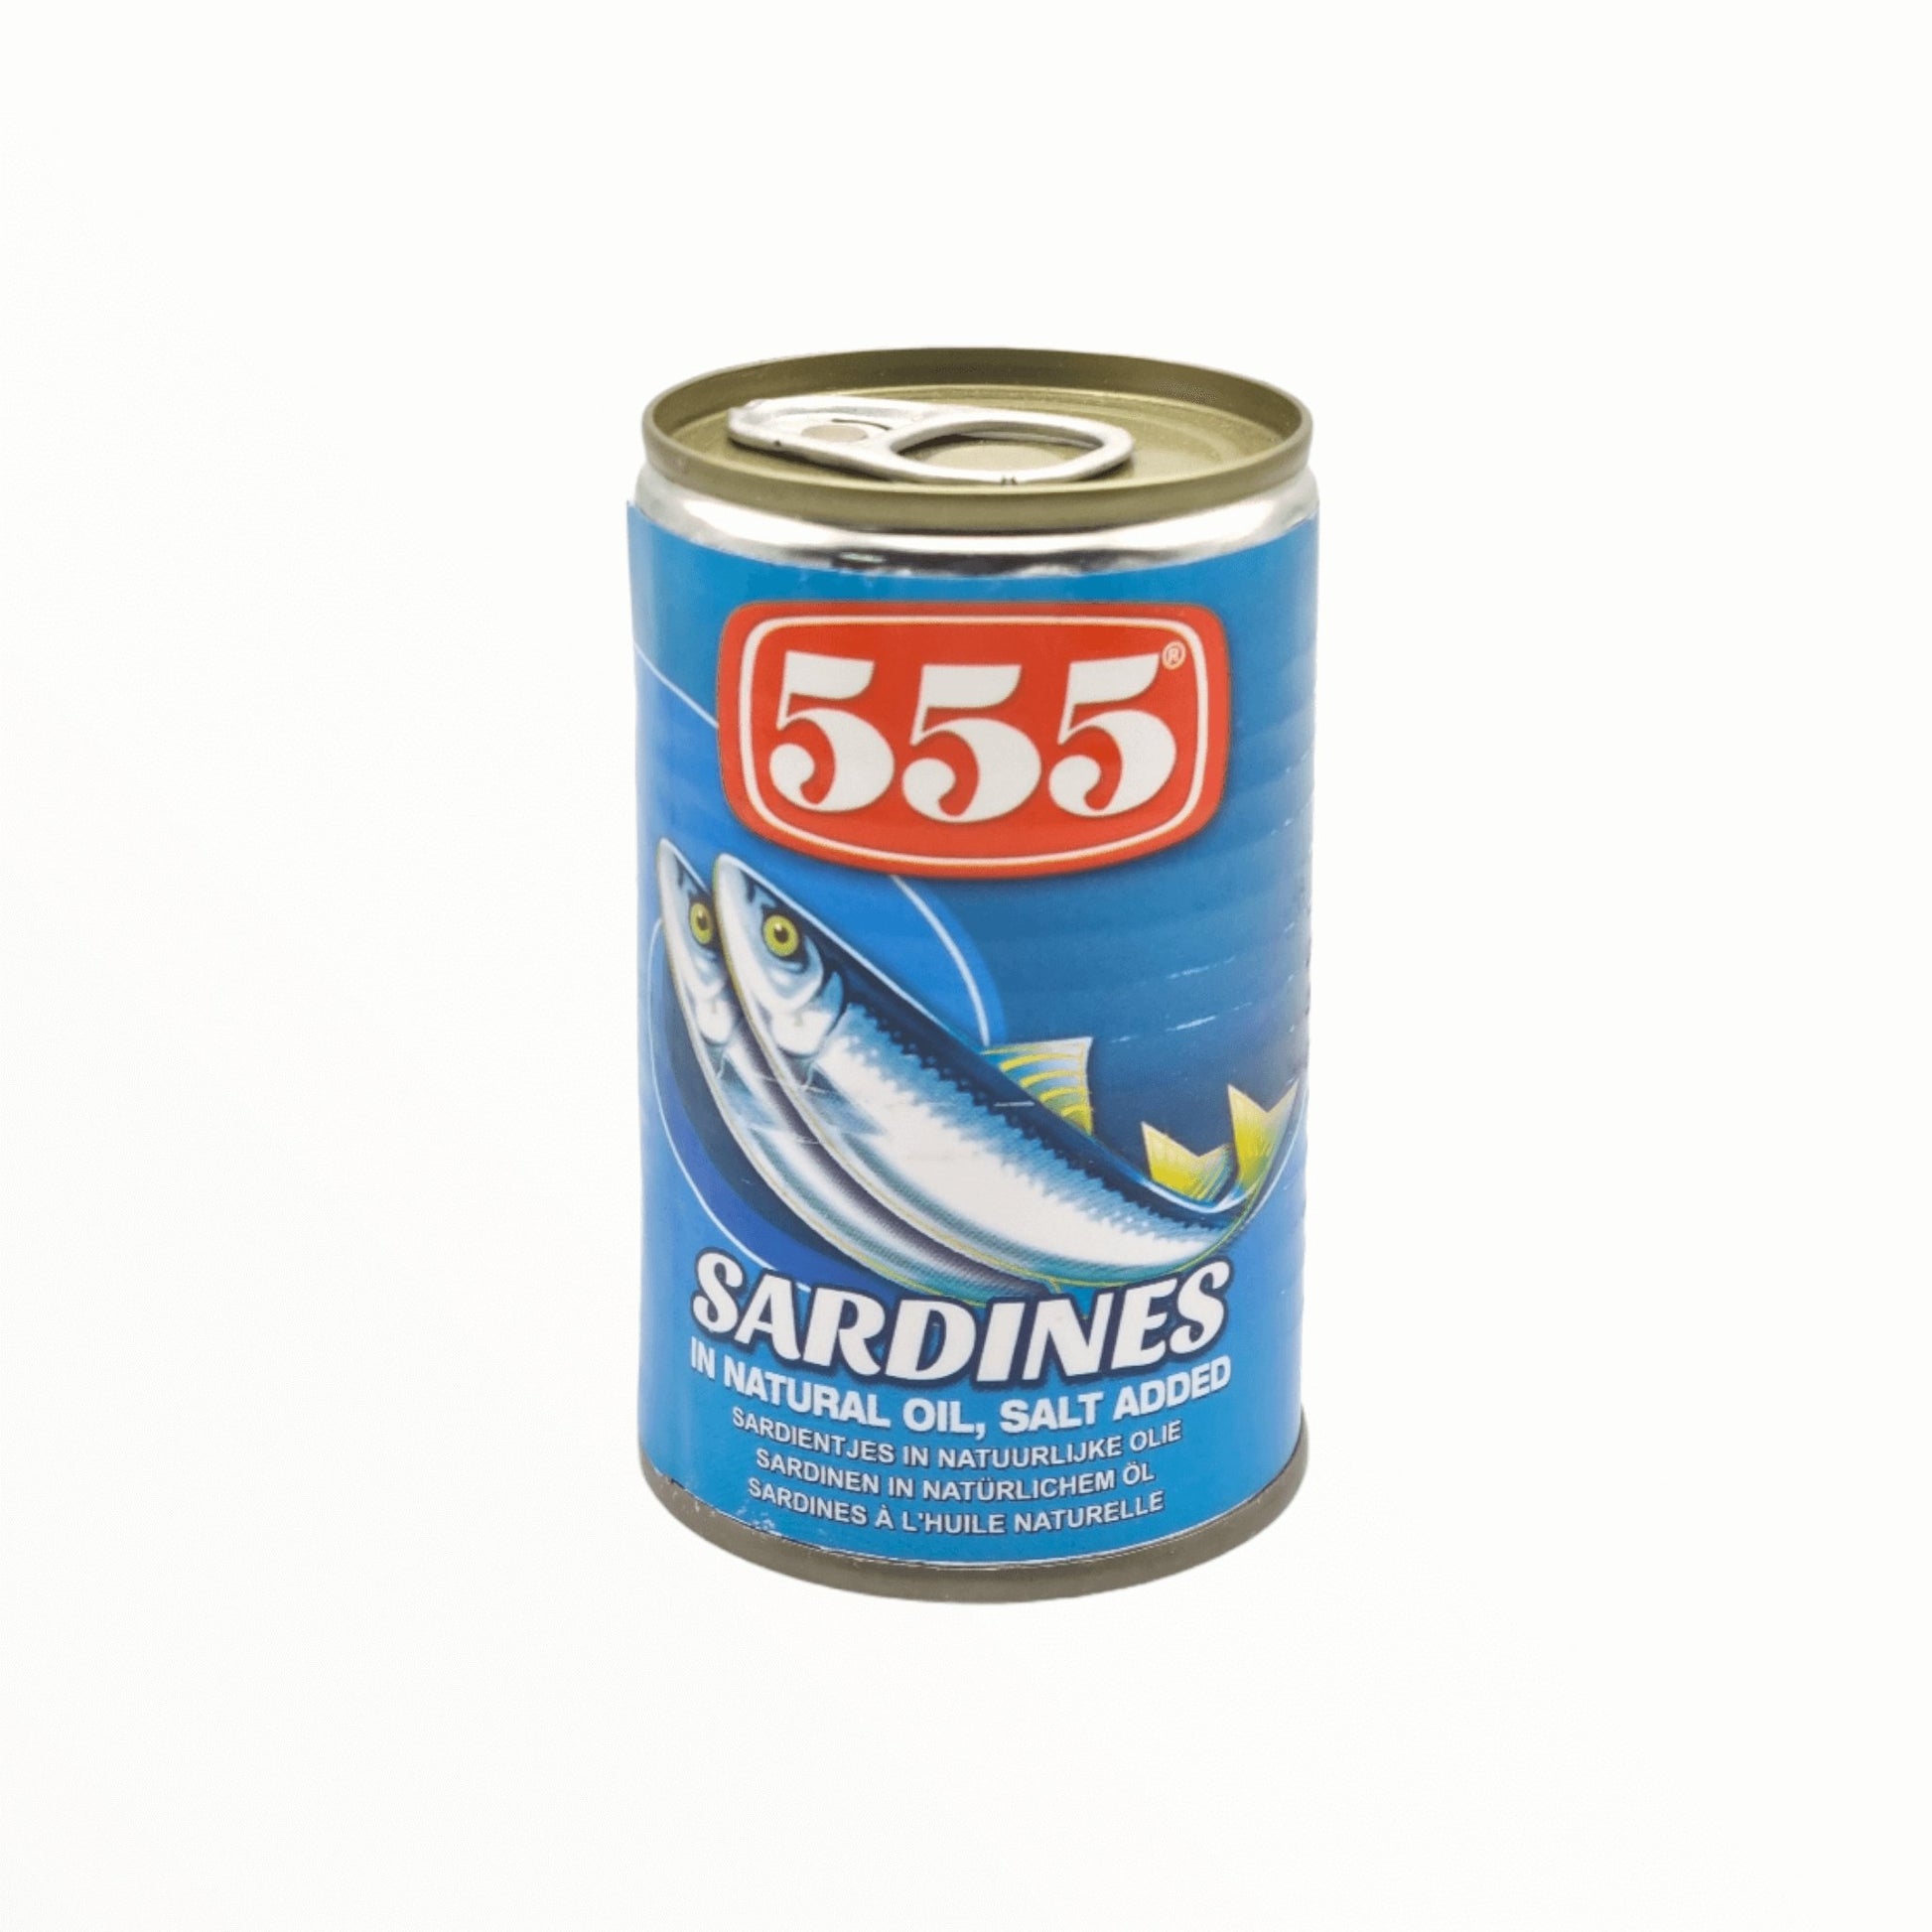 Sardines in Oil mit Salz 155g - Mabuhay Pinoy Asia Shop